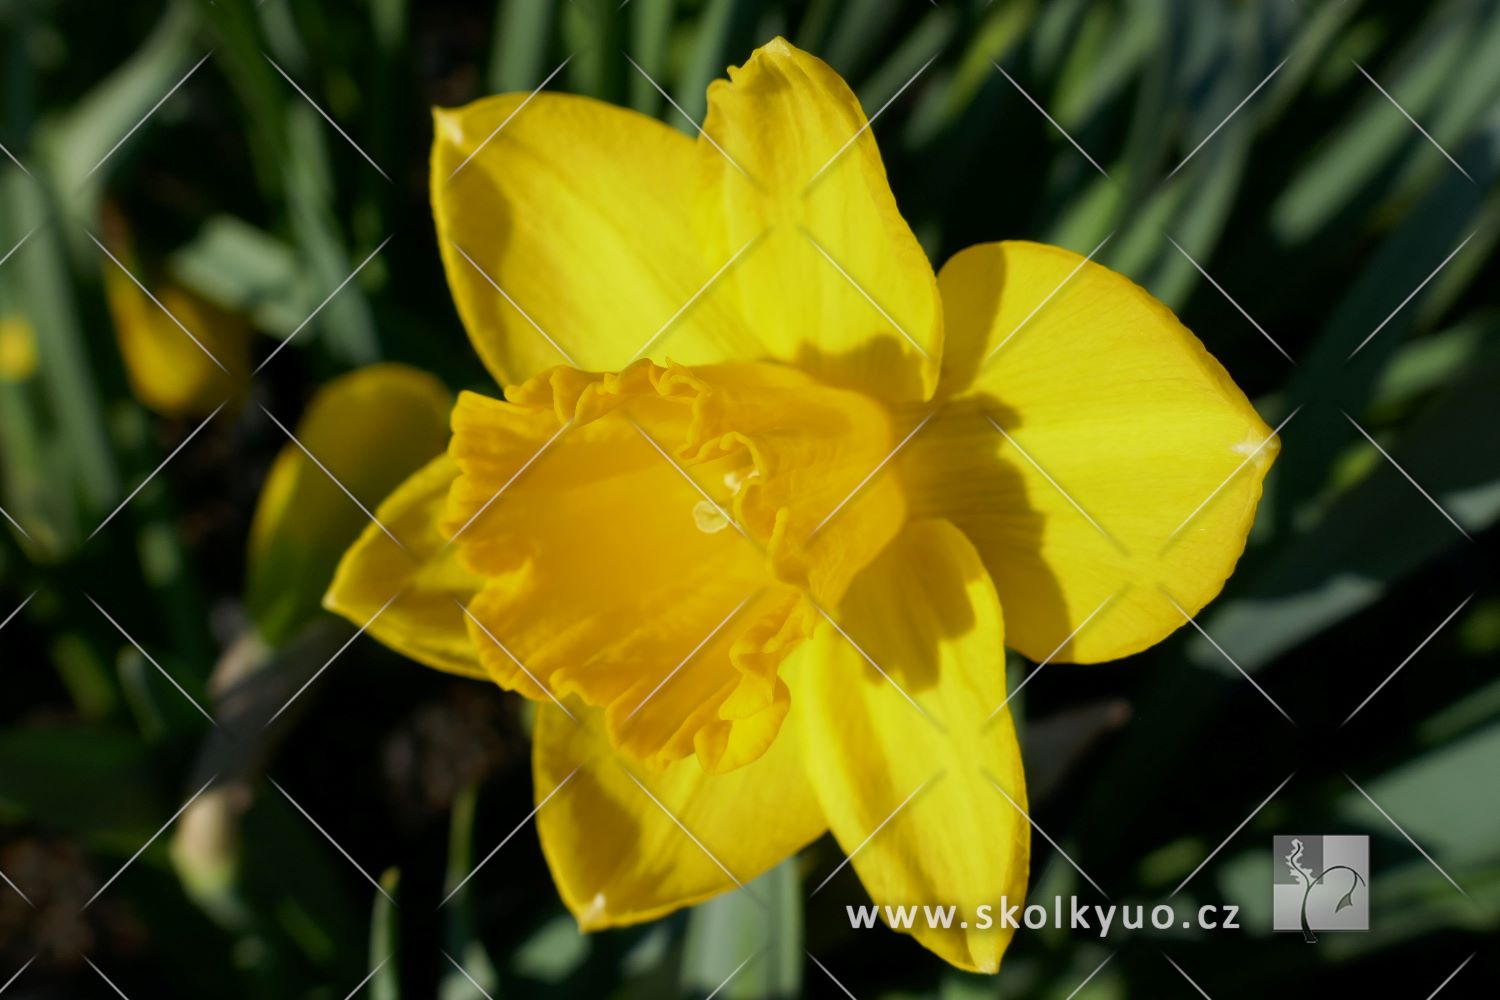 Narcissus hybrida ´Golden Harvest´